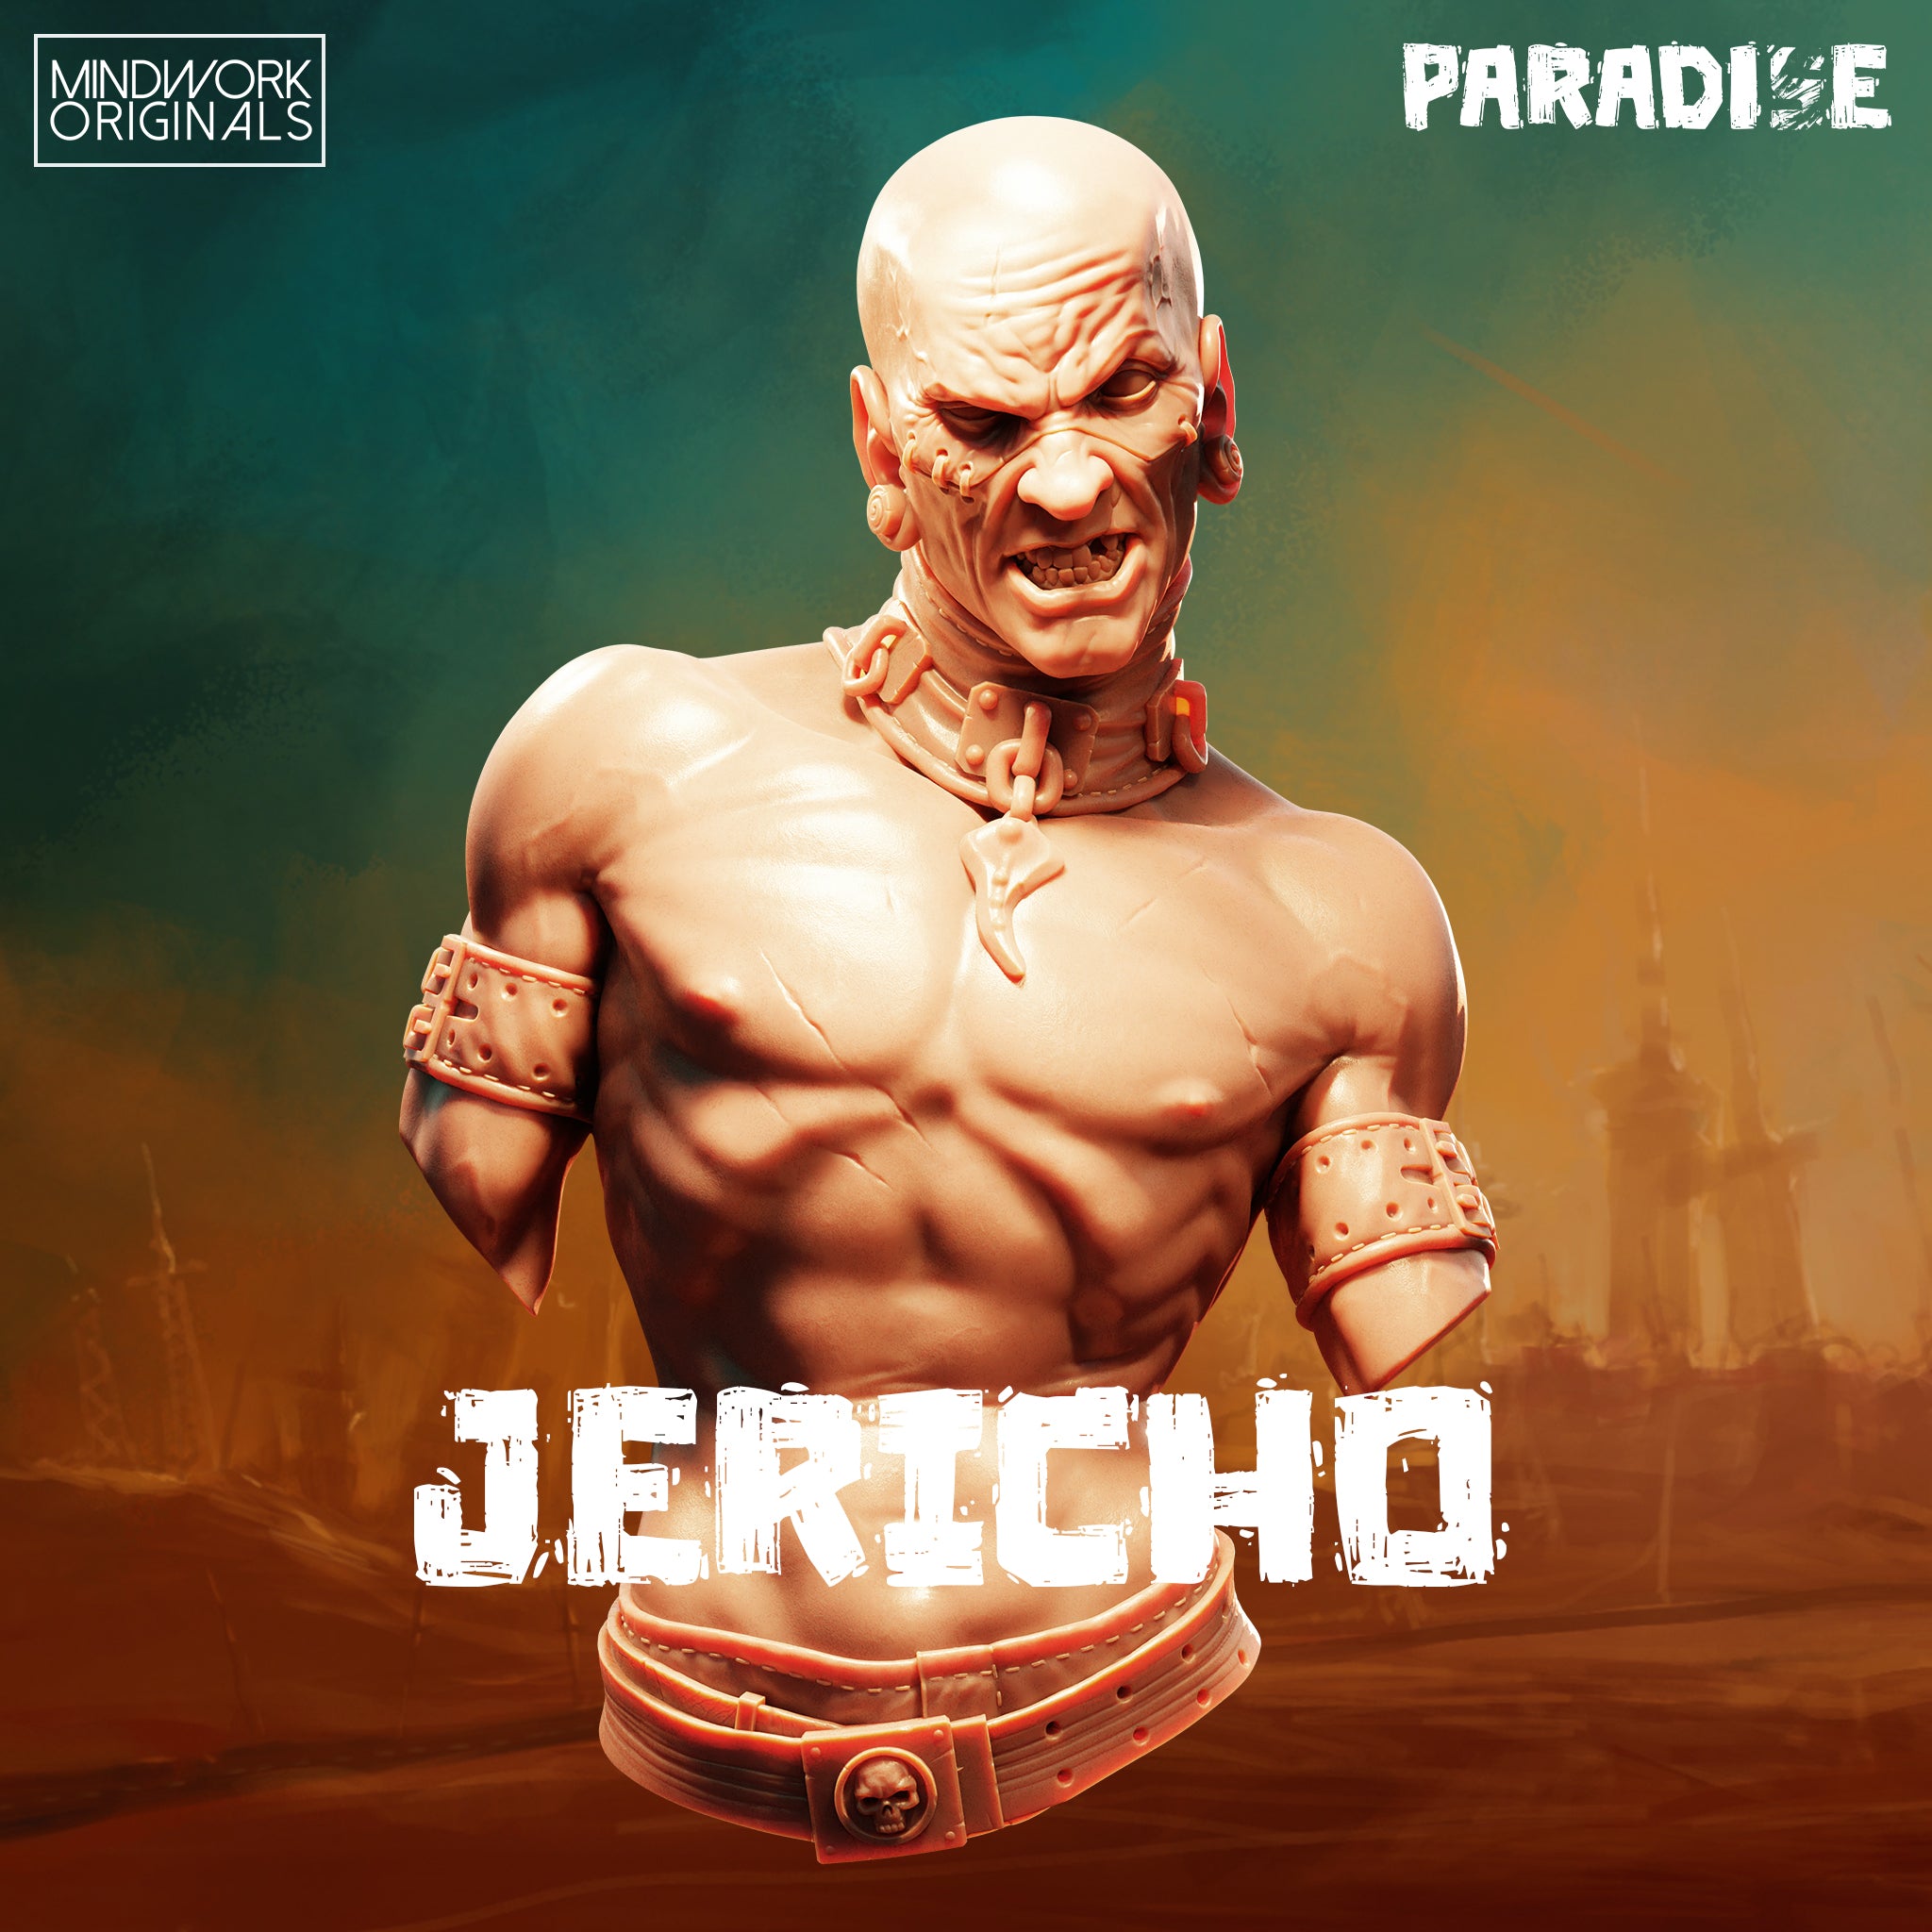 Paradise - Jericho Bust